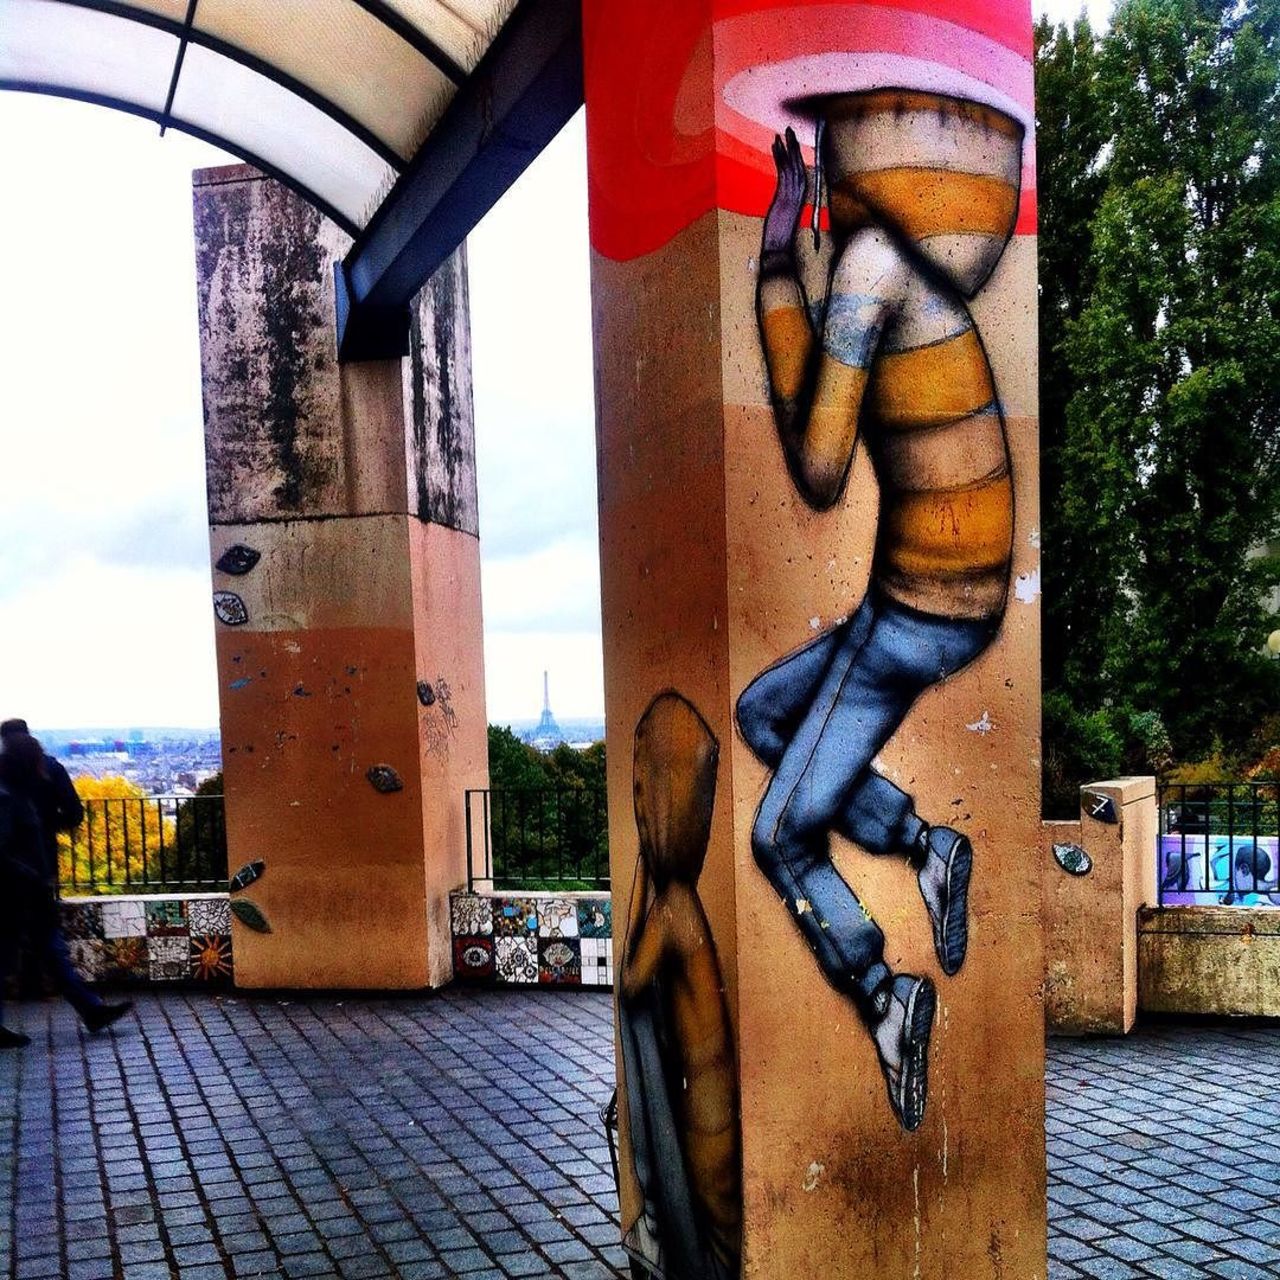 #Paris #graffiti photo by @noamzucker http://ift.tt/1hTCeCp #StreetArt https://t.co/b22WWahSjO